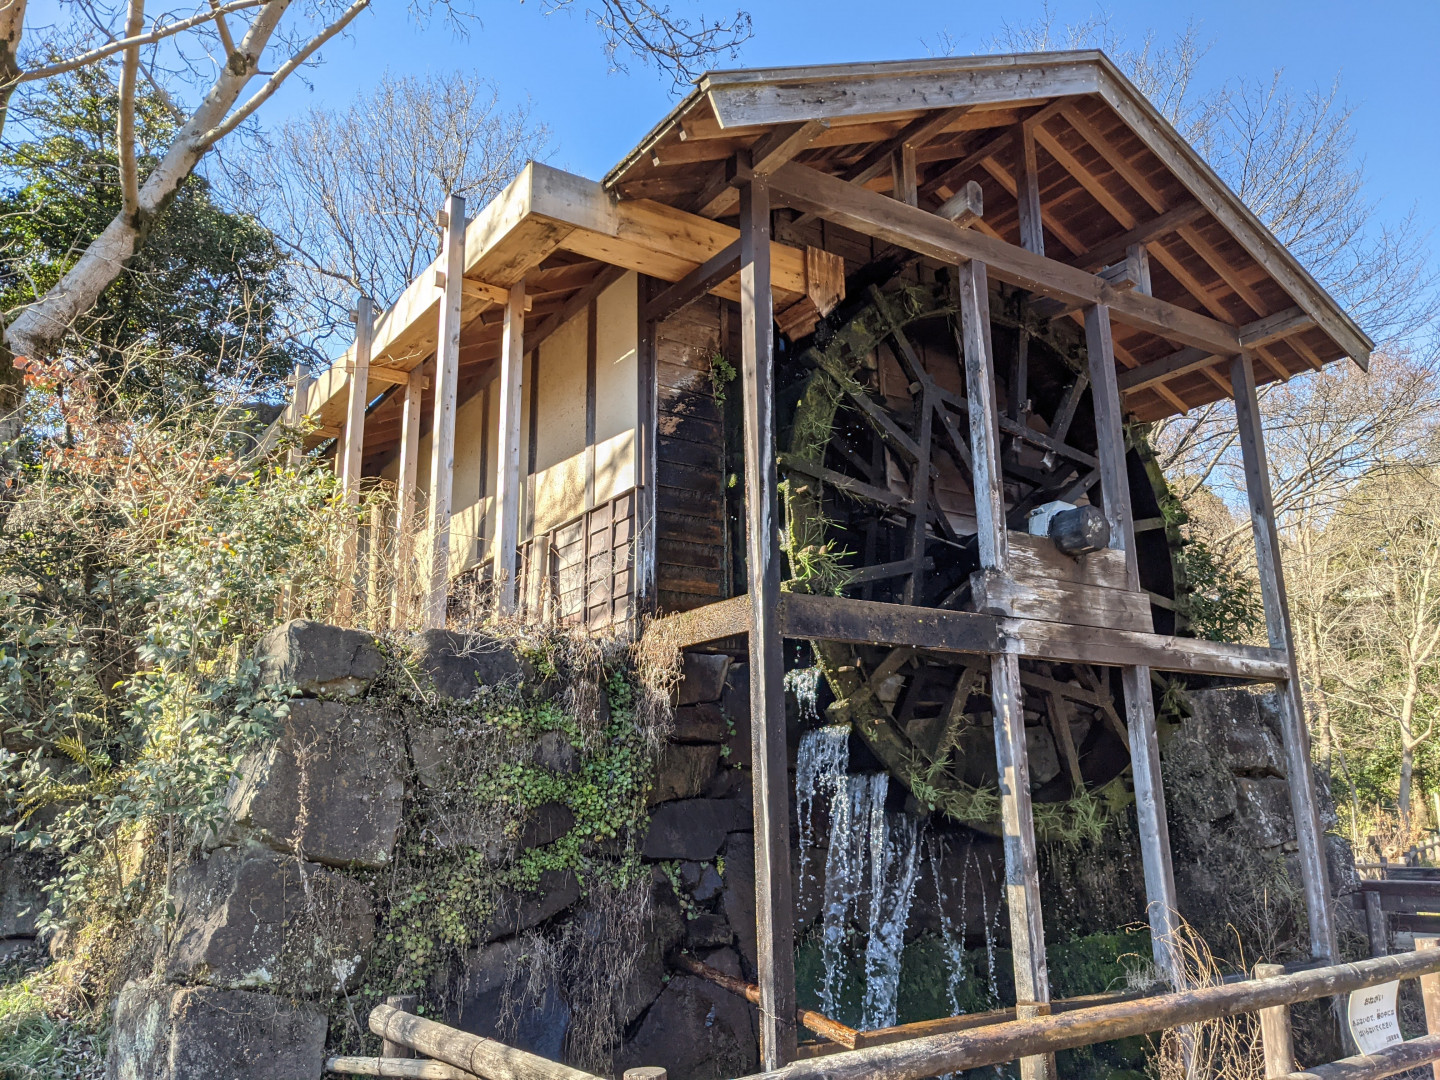 Working watermill at Izumi-no-Mori Park